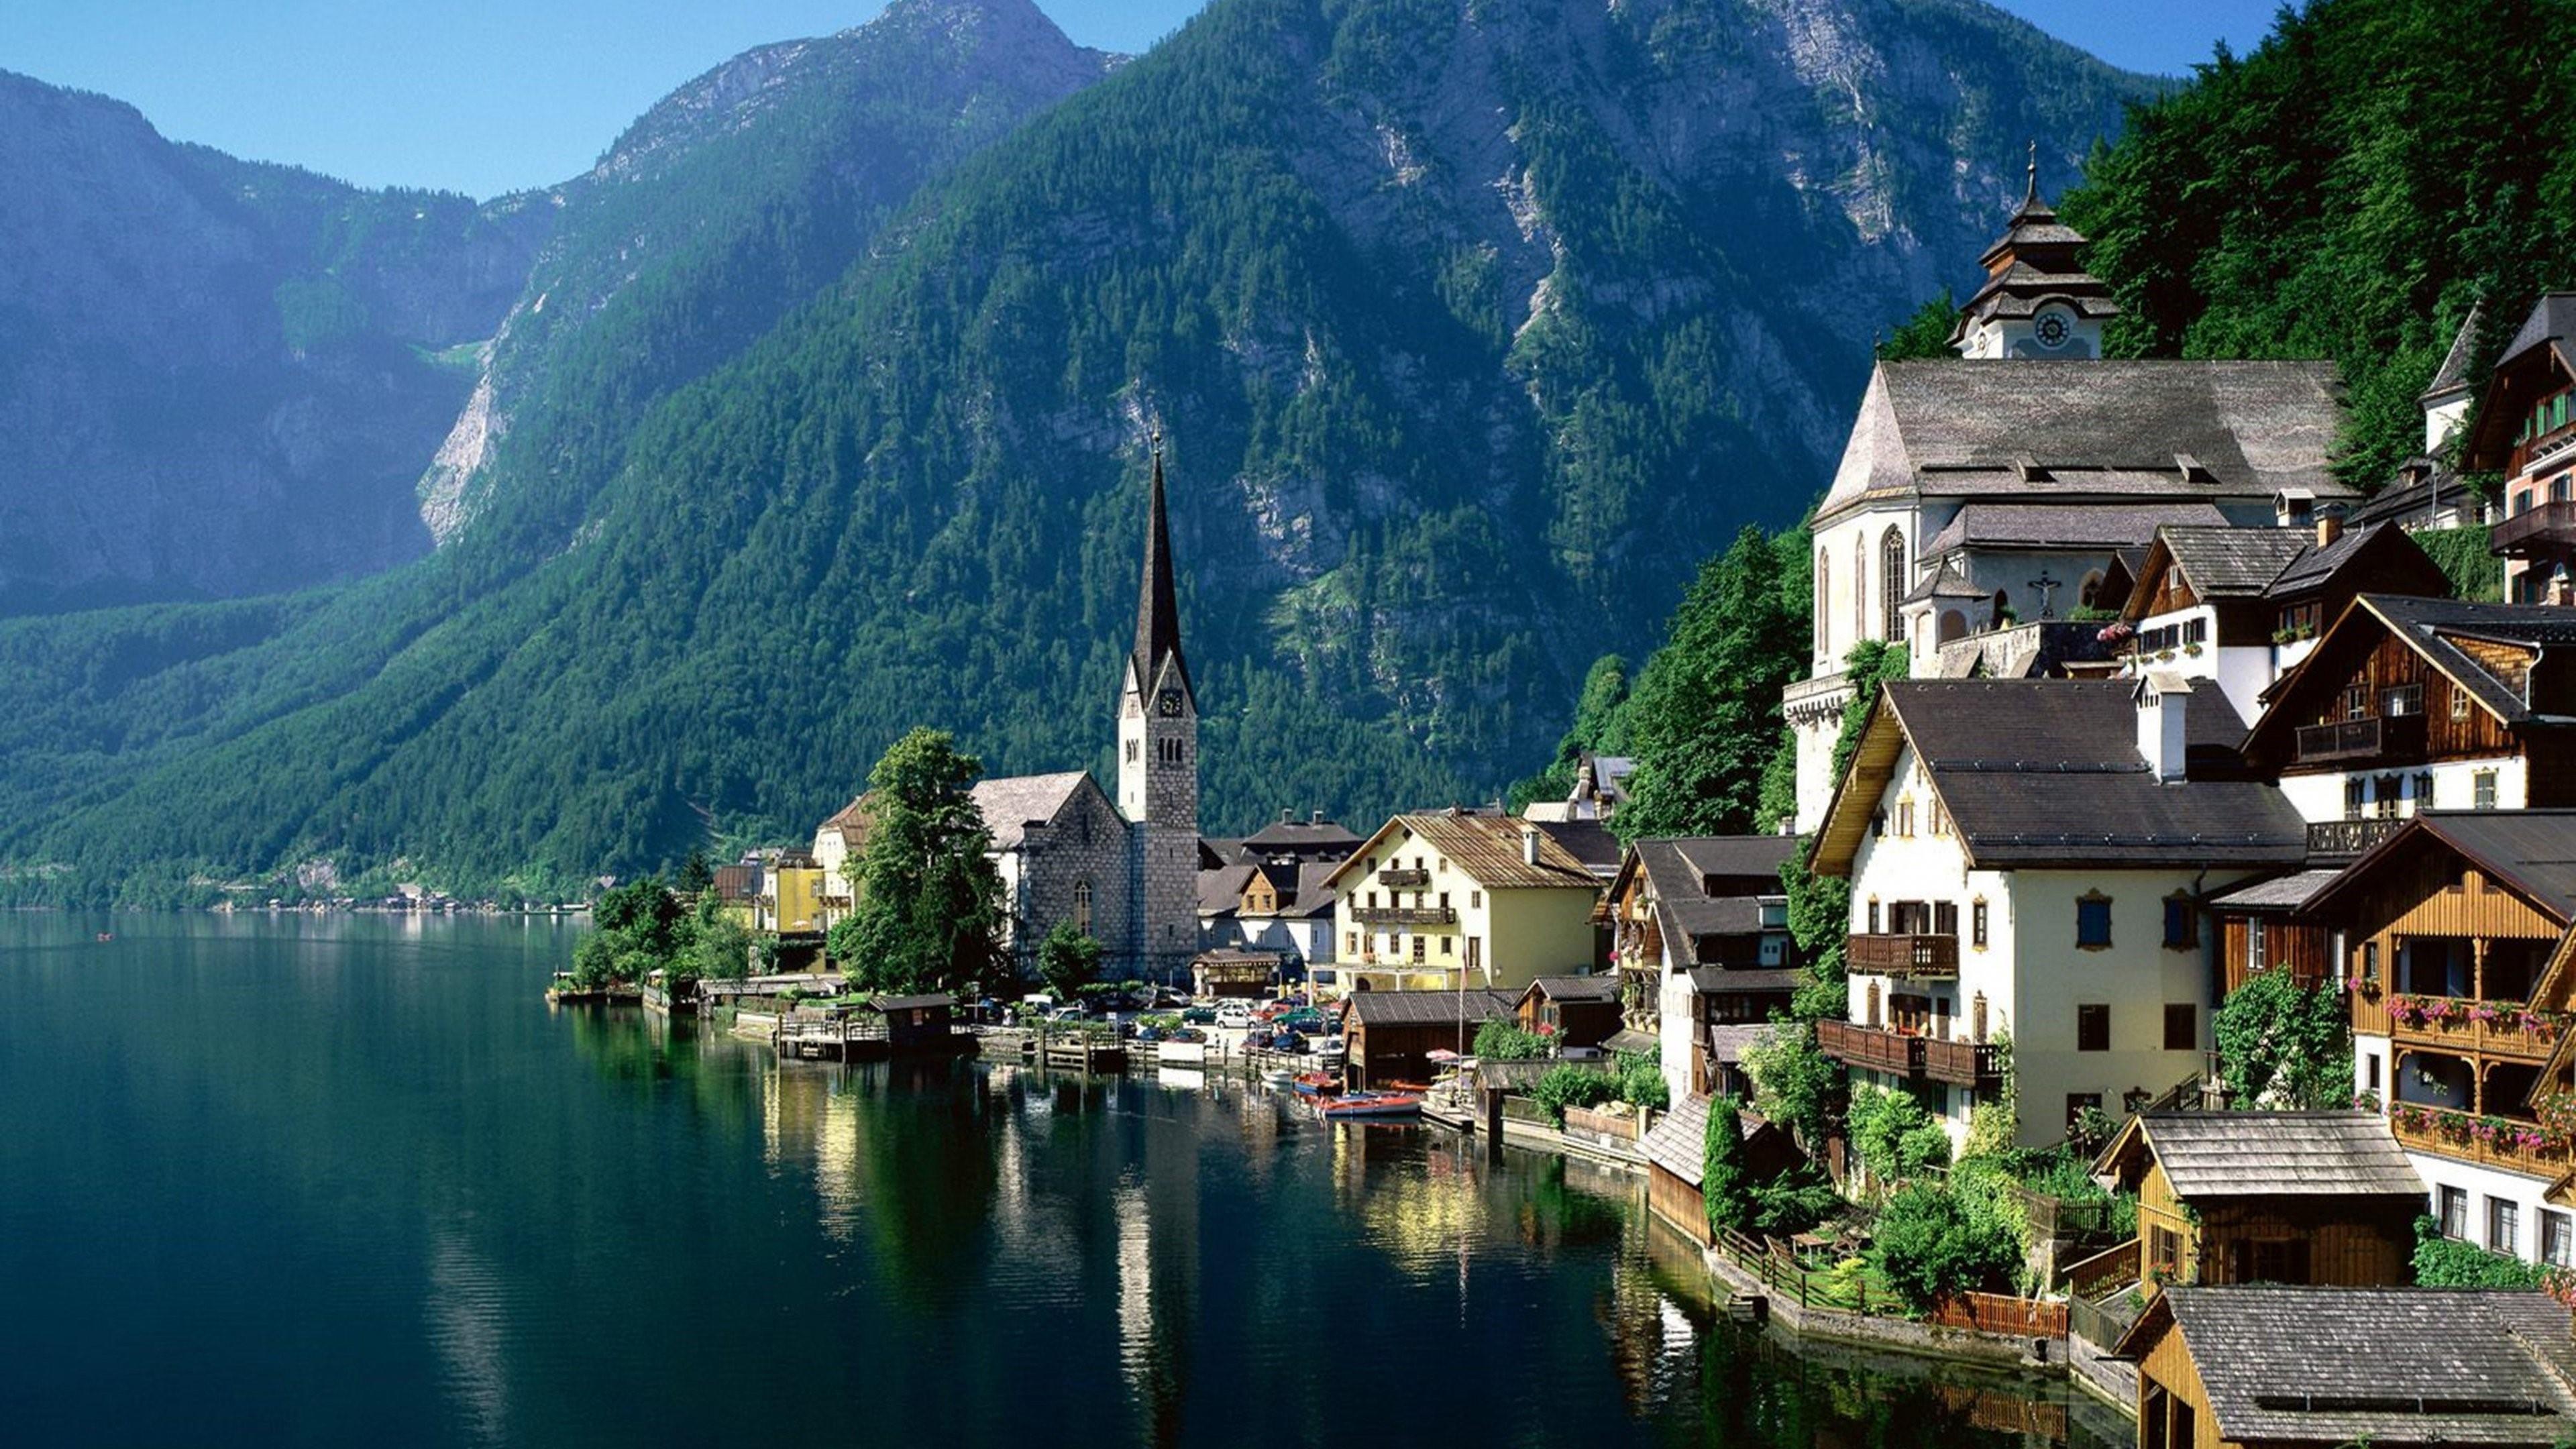 3840 x 2160 · jpeg - Wonderful mountain village - Hallstatt, Austria wallpaper - backiee